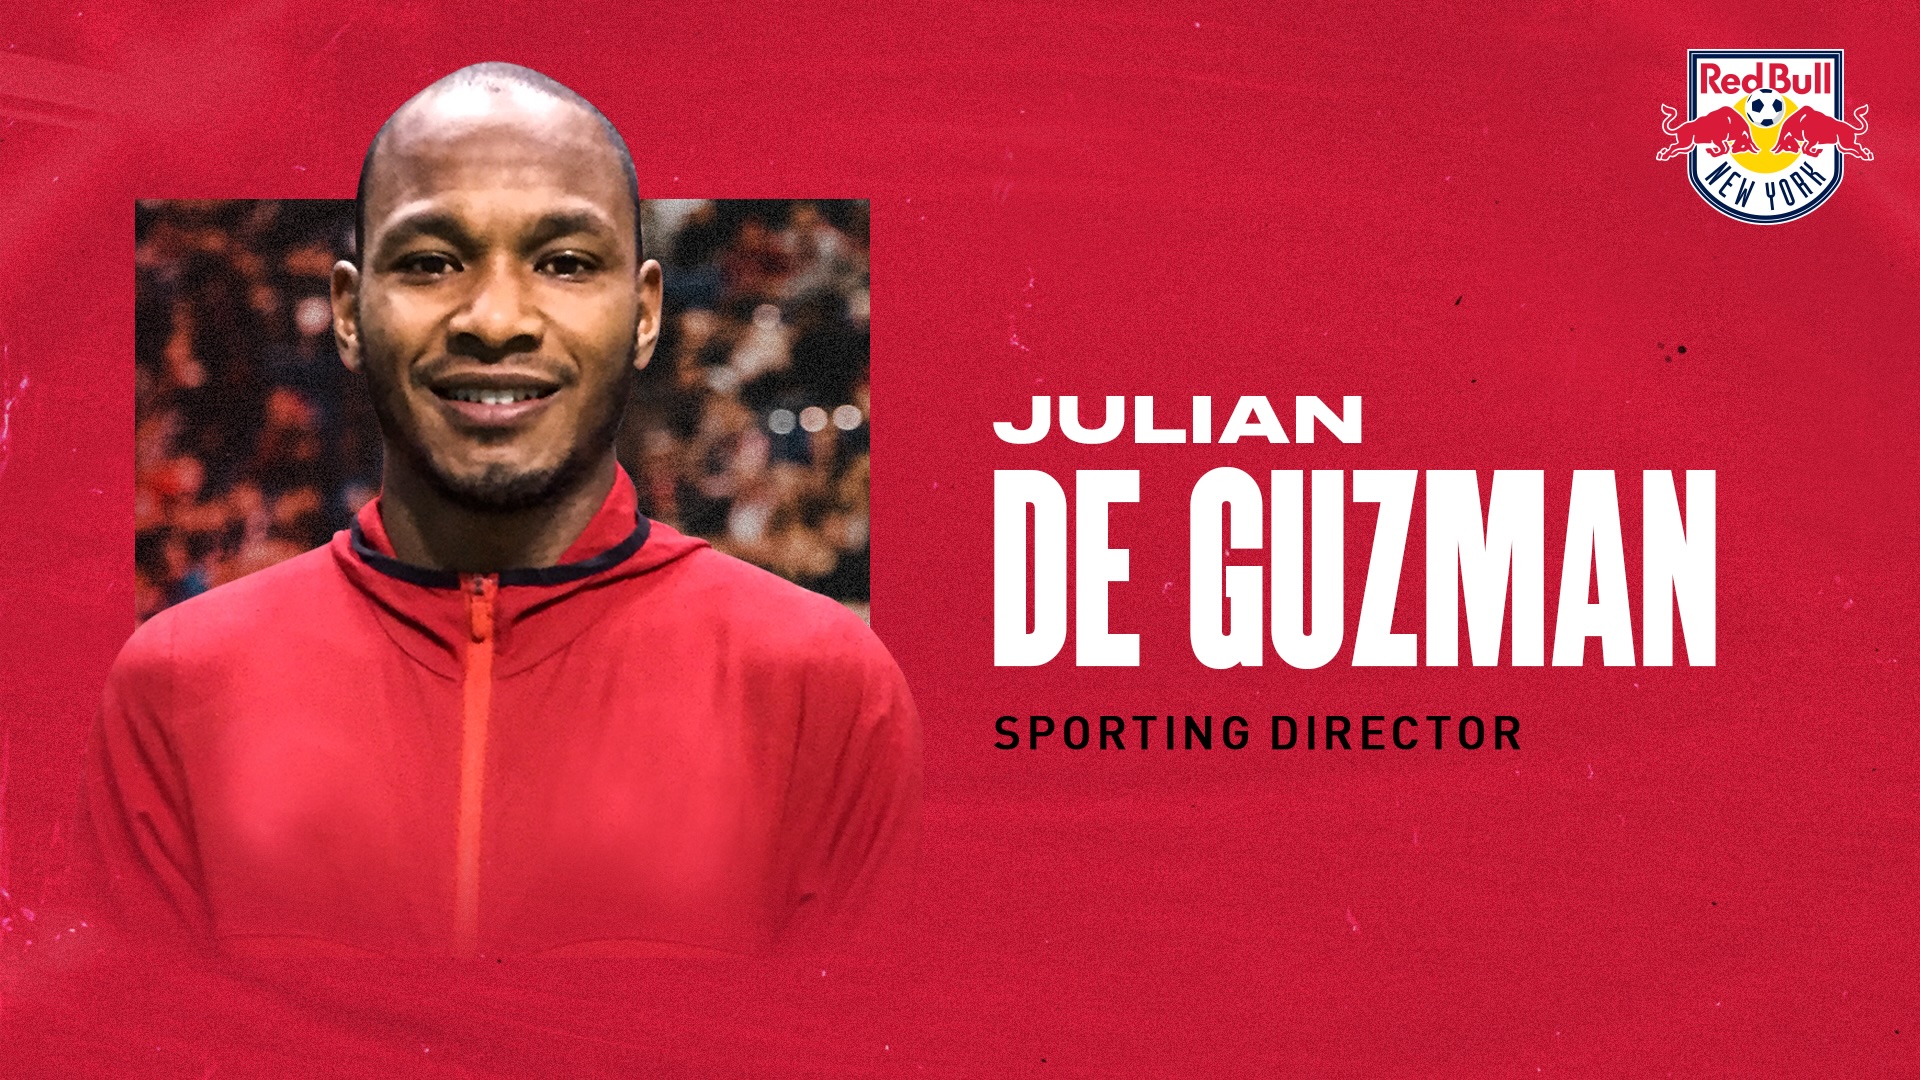 New York Red Bulls AppointJulian de Guzman as Sporting Director